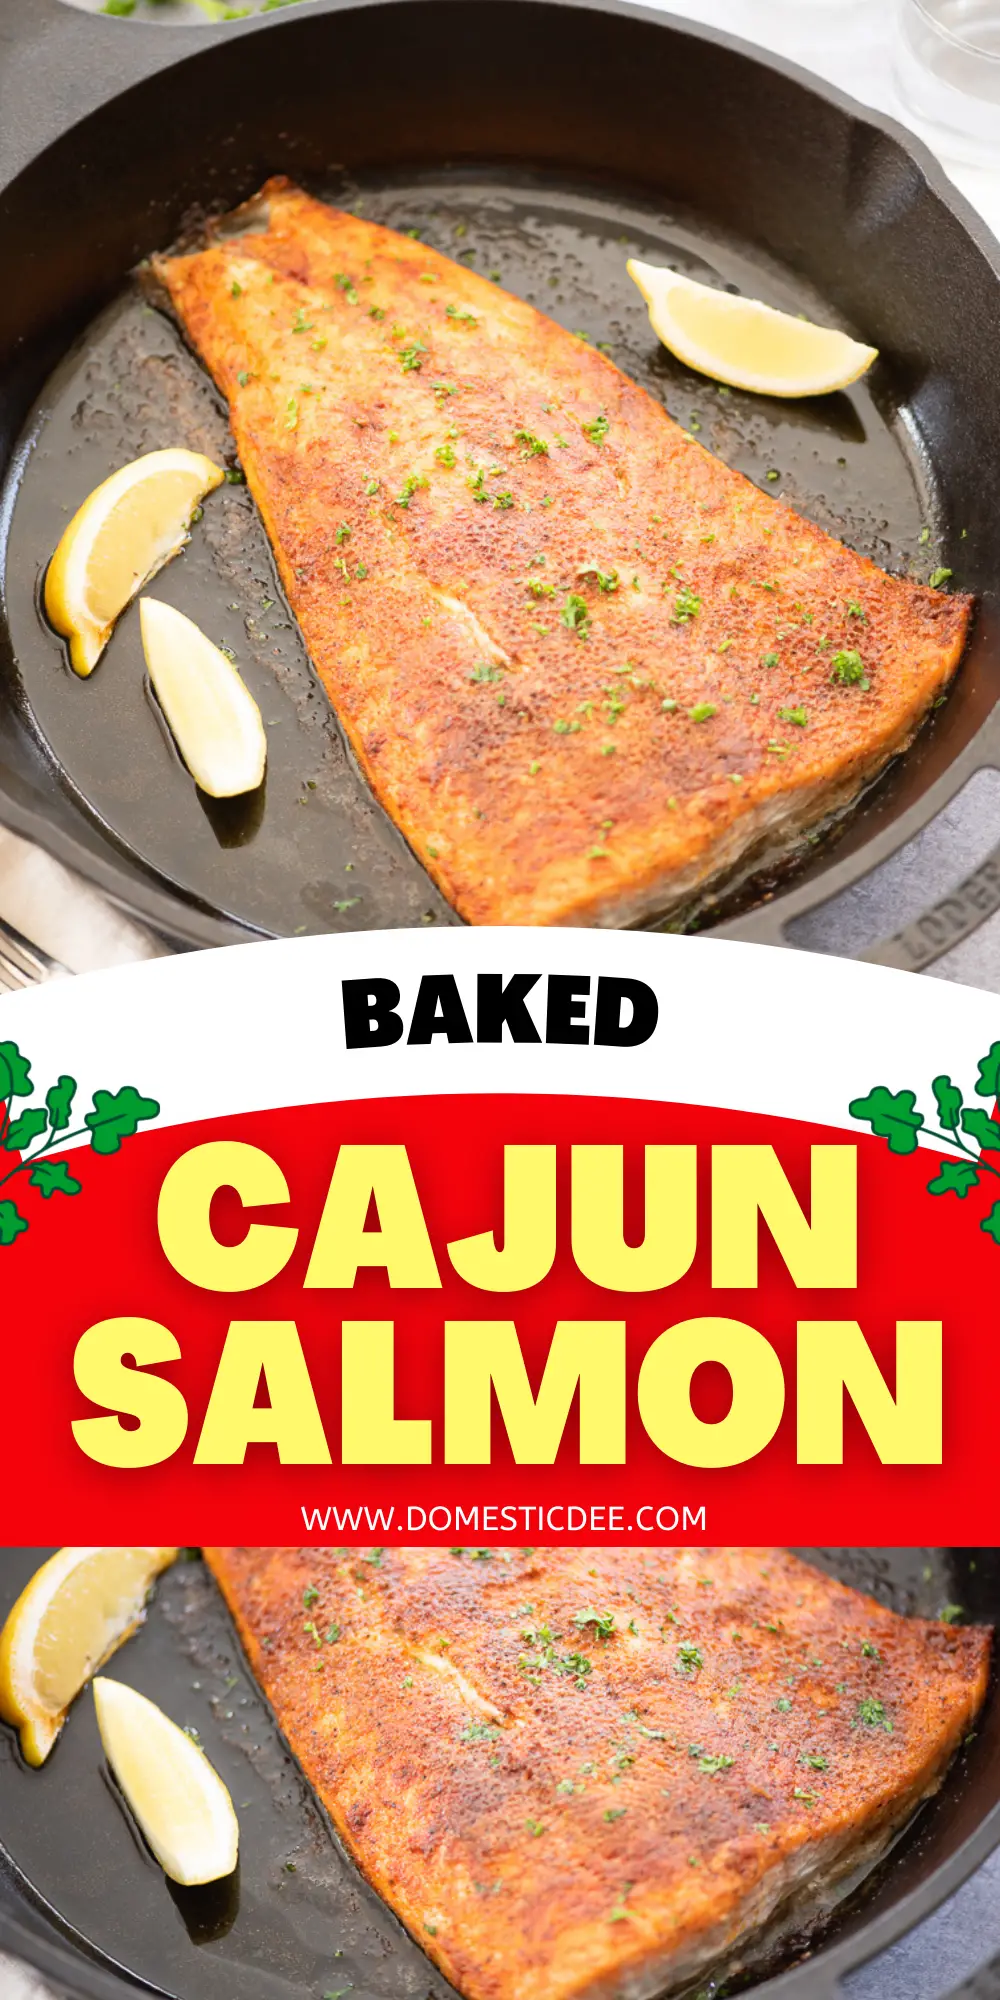 Easy Baked Cajun Salmon Recipe